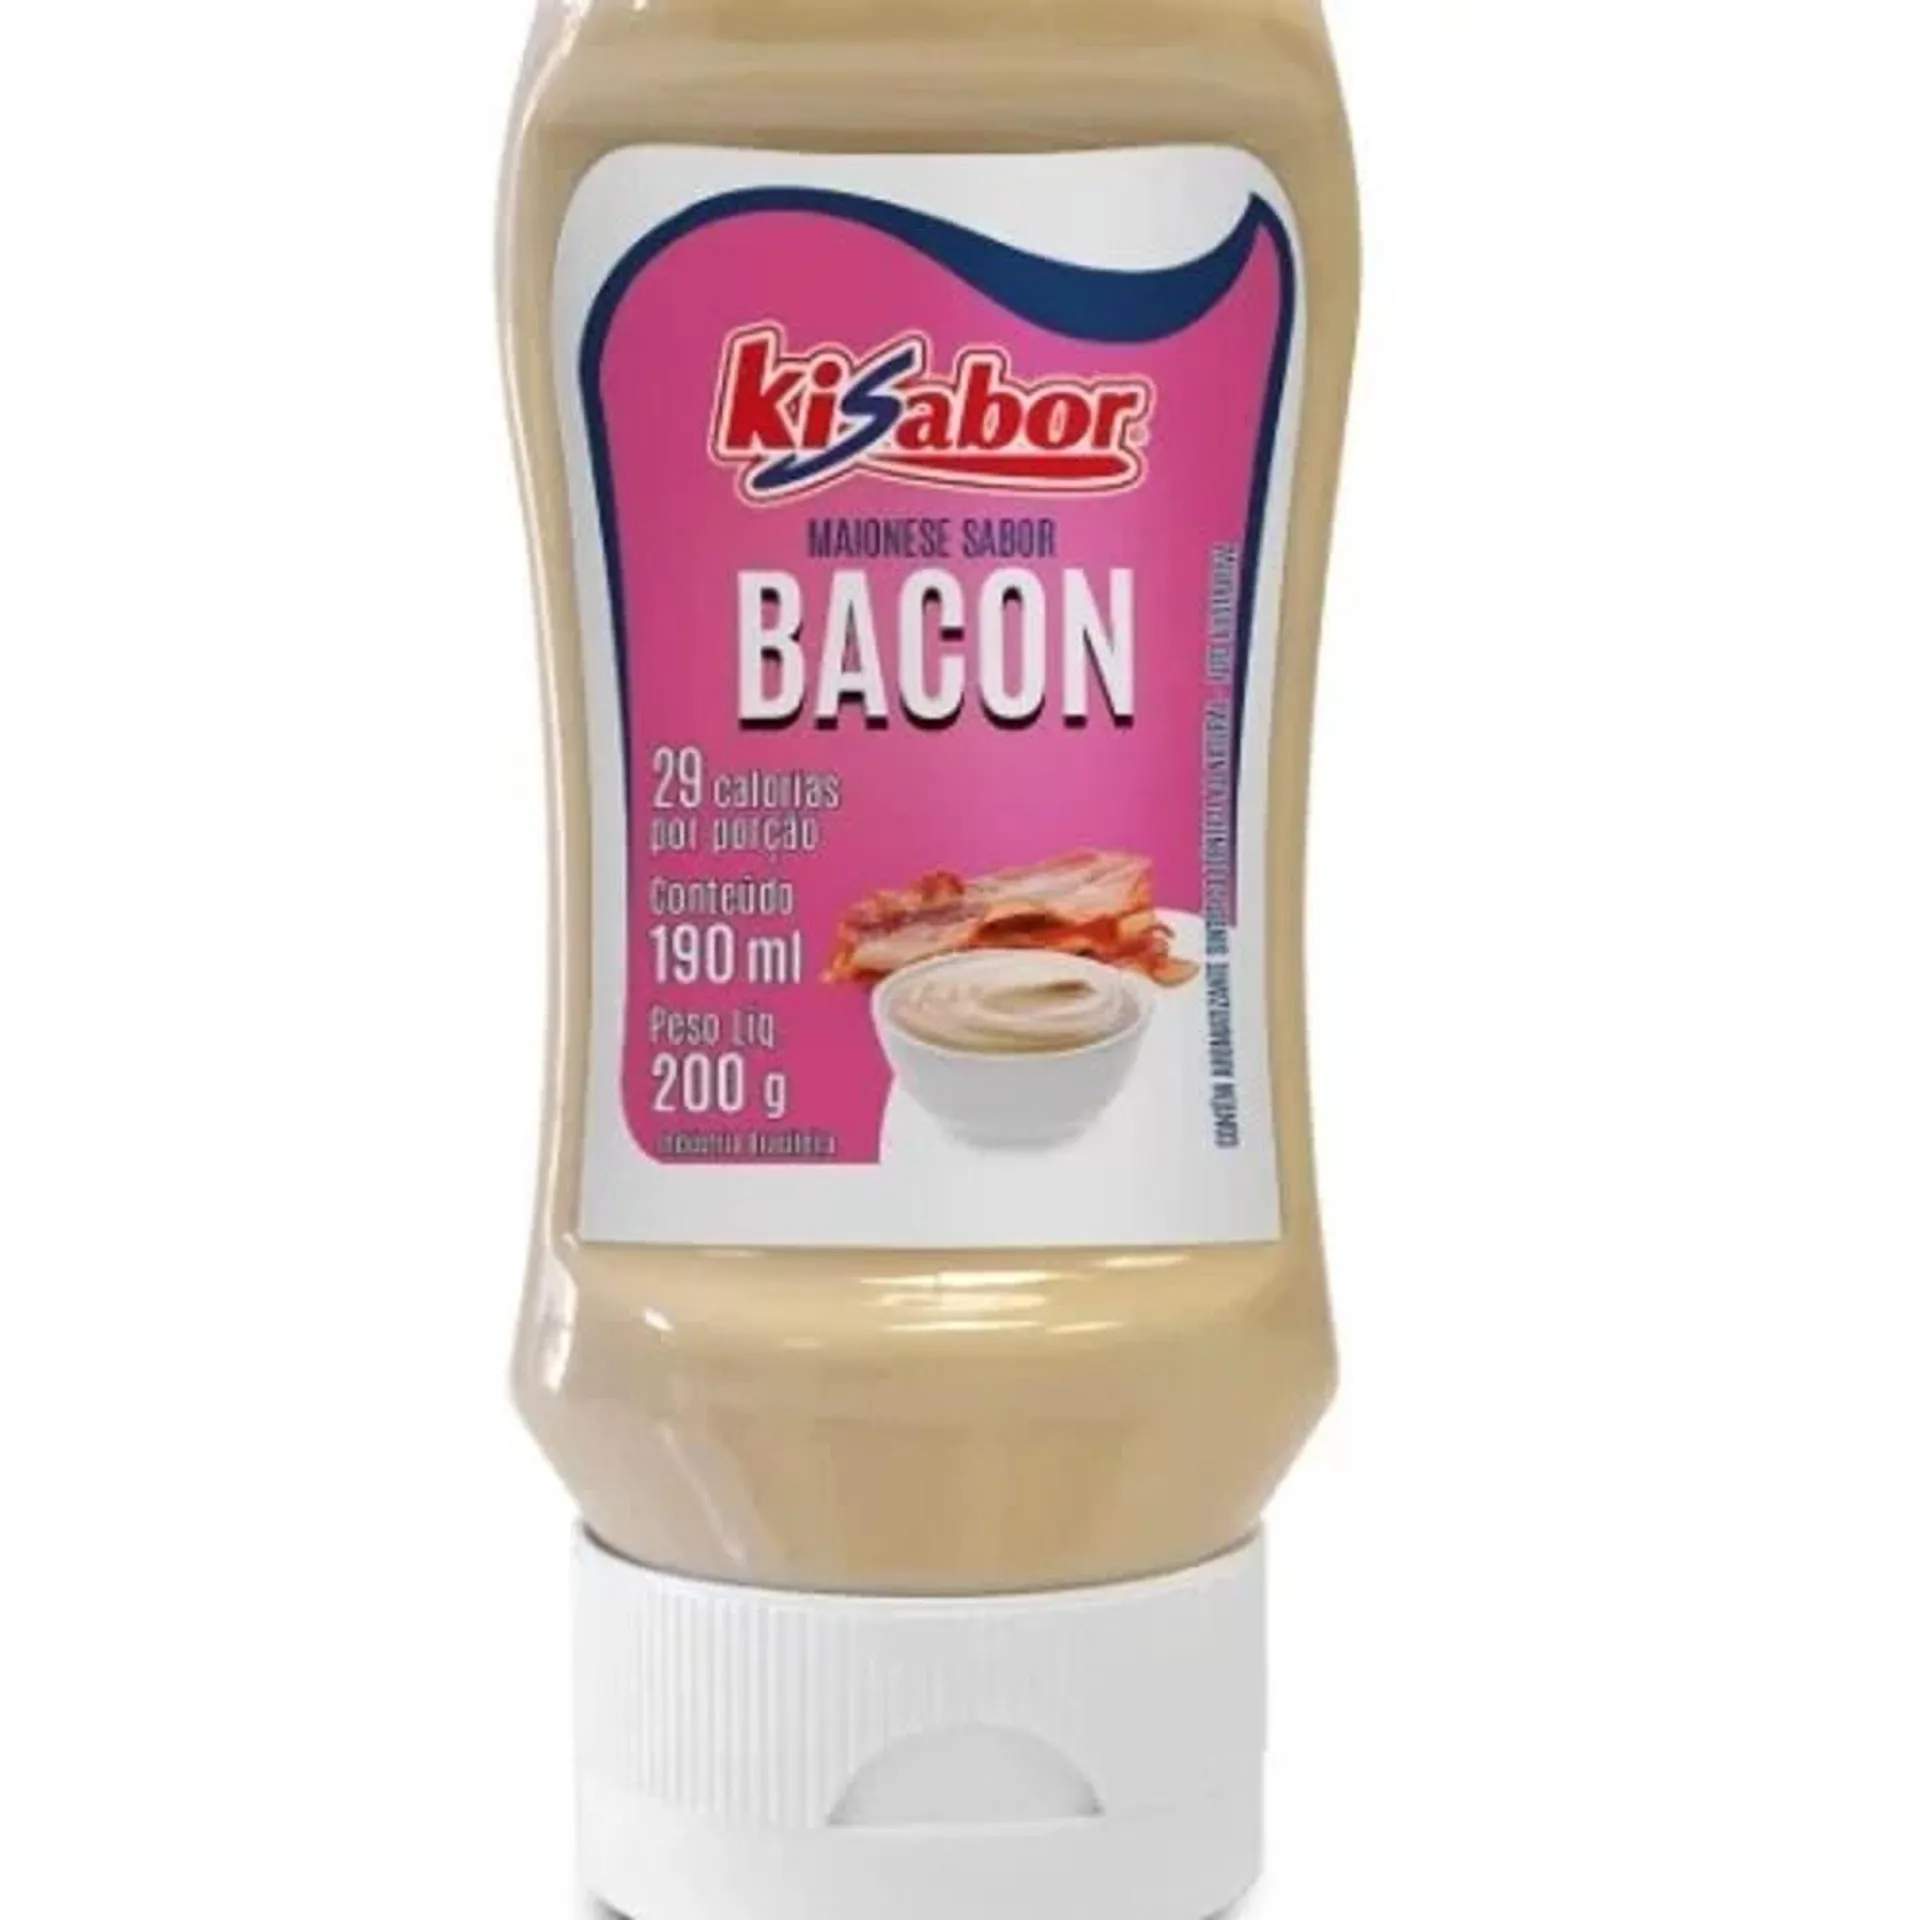 Maionese Kisabor C/ Bacon Pet 200g